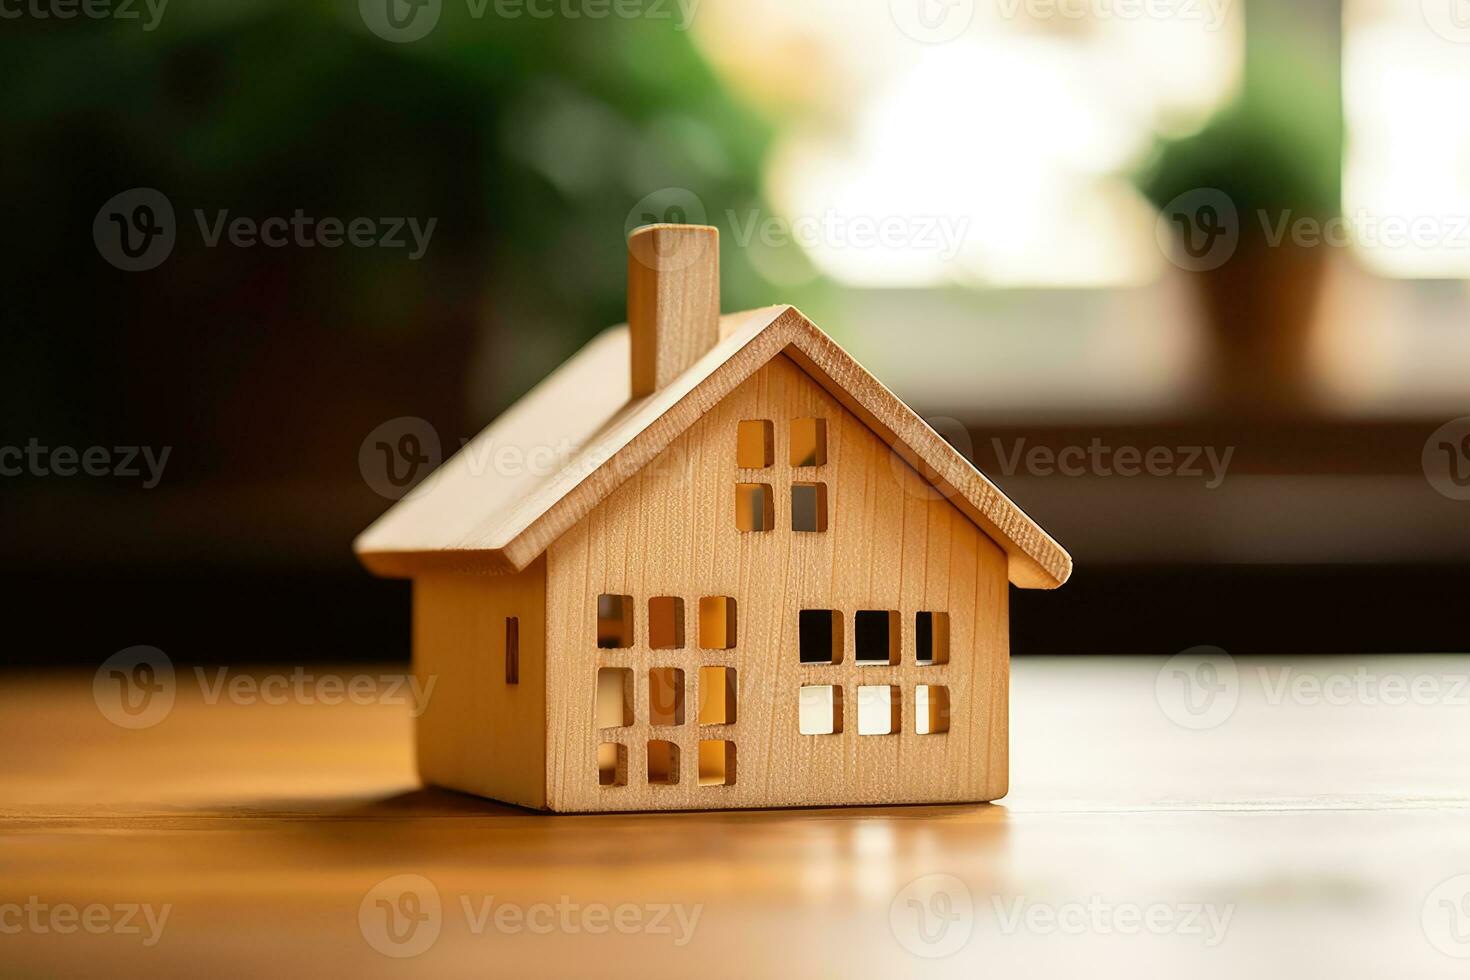 en trä- hus i tabell, verklig egendom begrepp foto